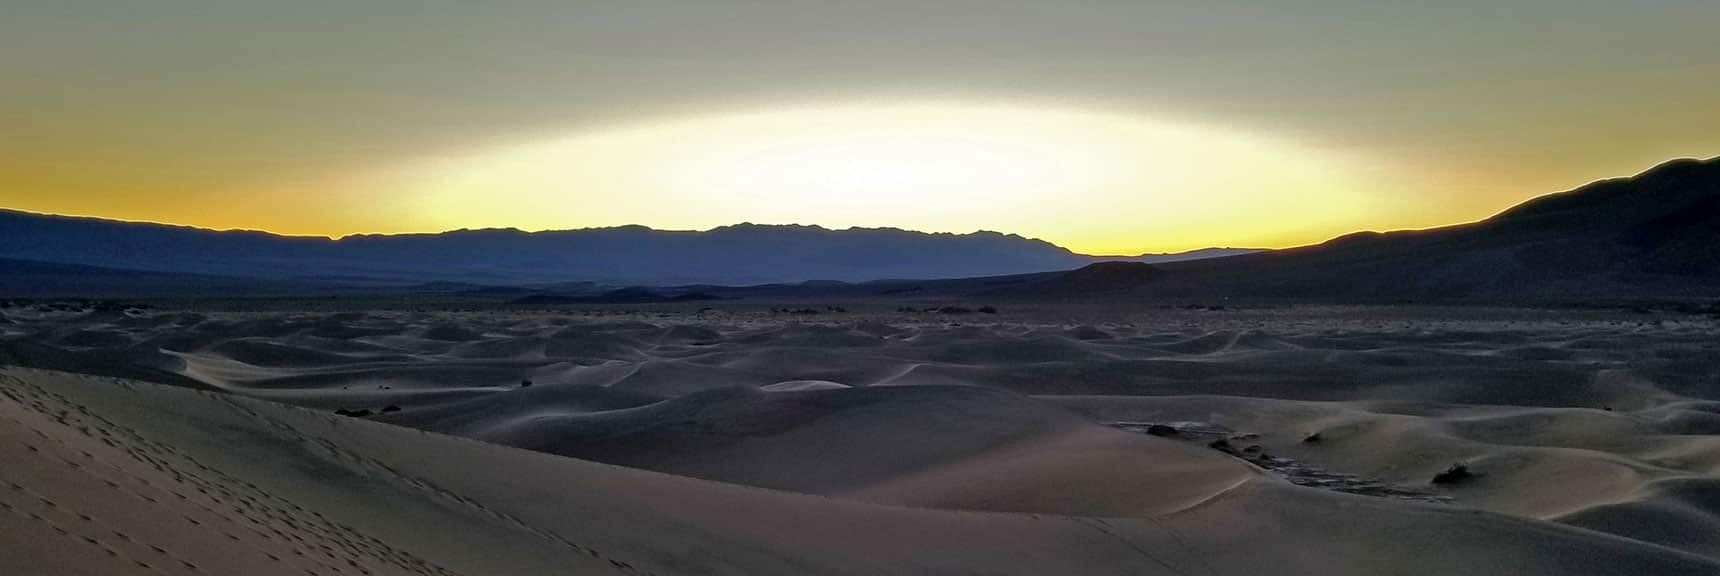 View South | Mesquite Sand Dunes Sunrise | Death Valley National Park, California